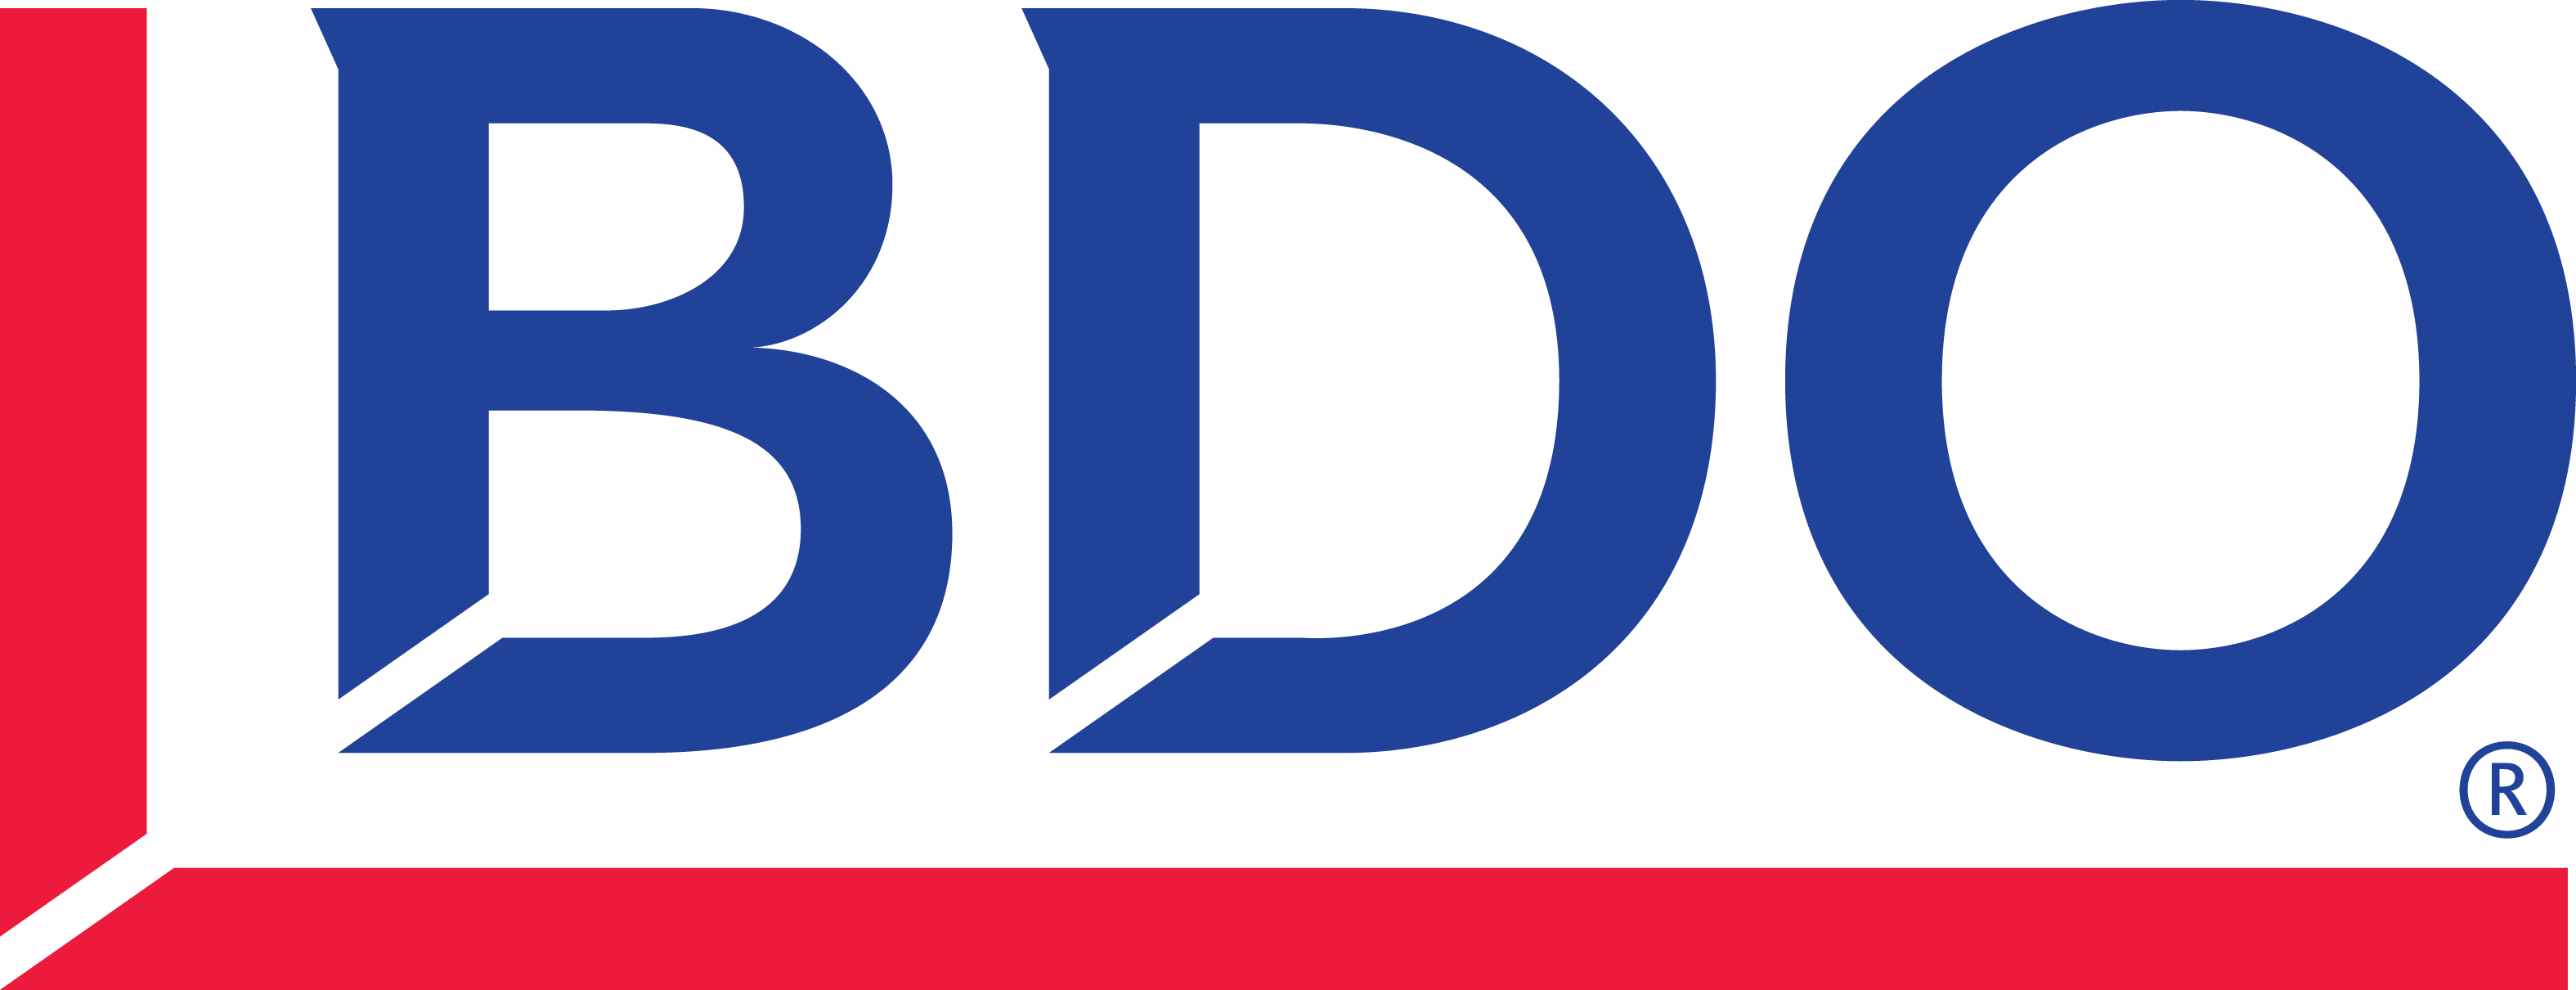 BDO-Logo-High-Res-PNG.png